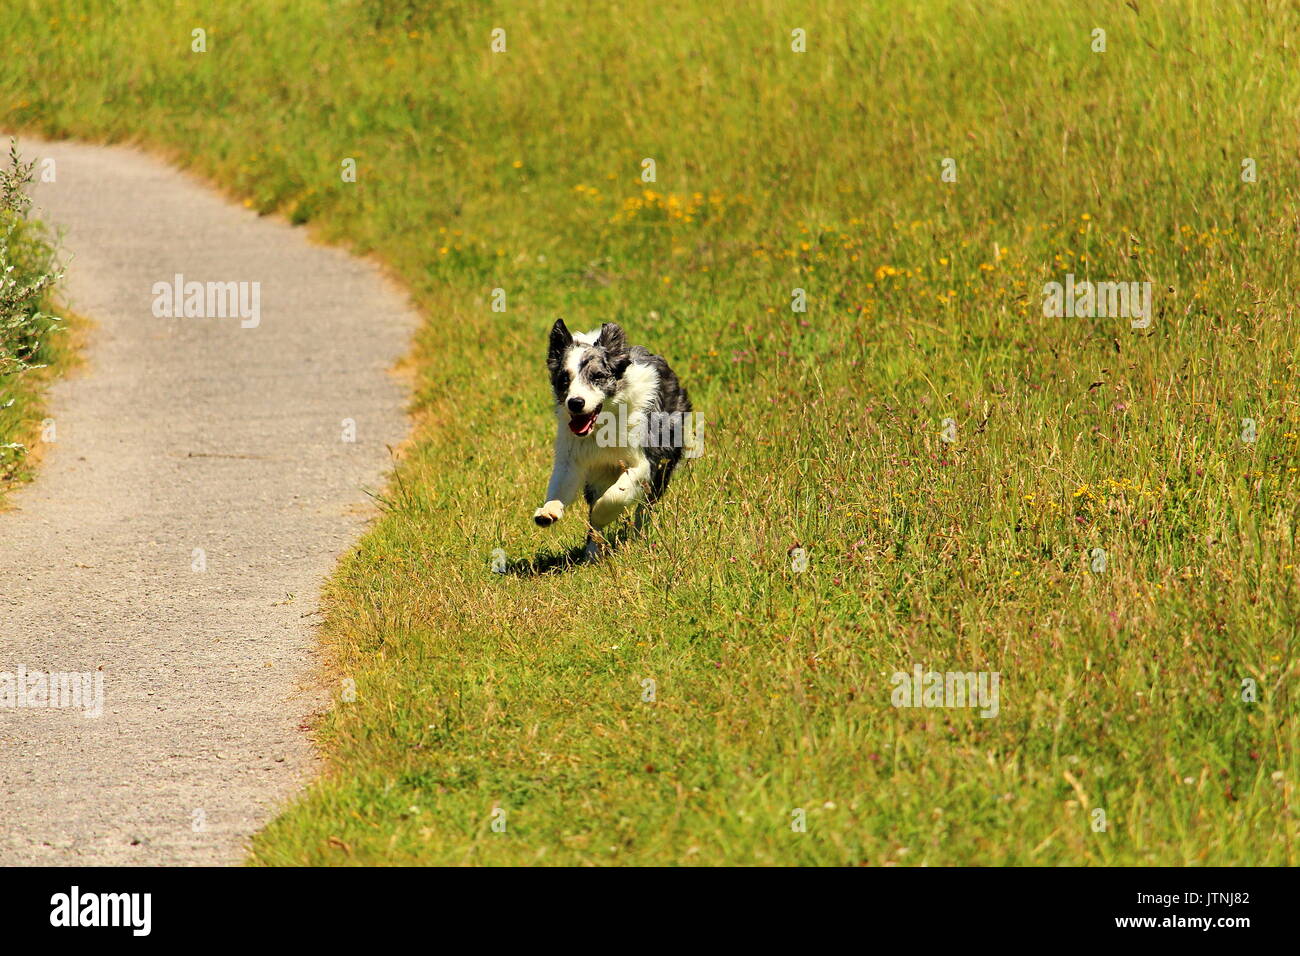 A  bordercollie dog who runs near a path in the grass of a merry air Stock Photo